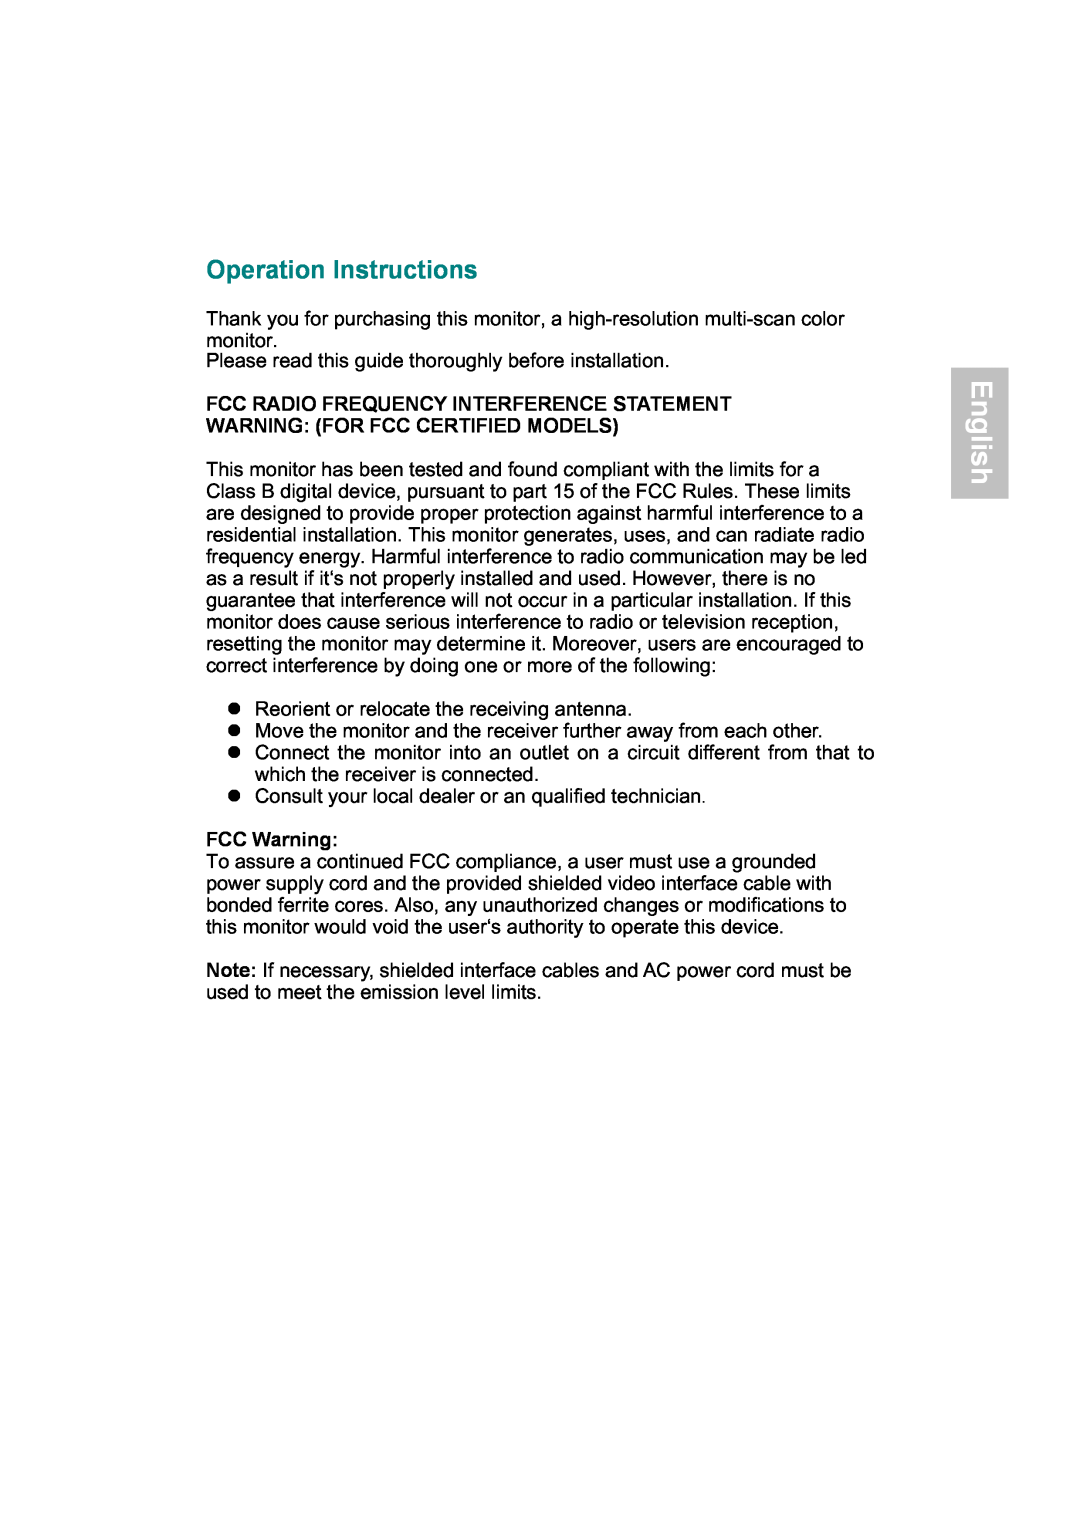 AOC 919Sw-1 manual English, Operation Instructions, FCC Warning 